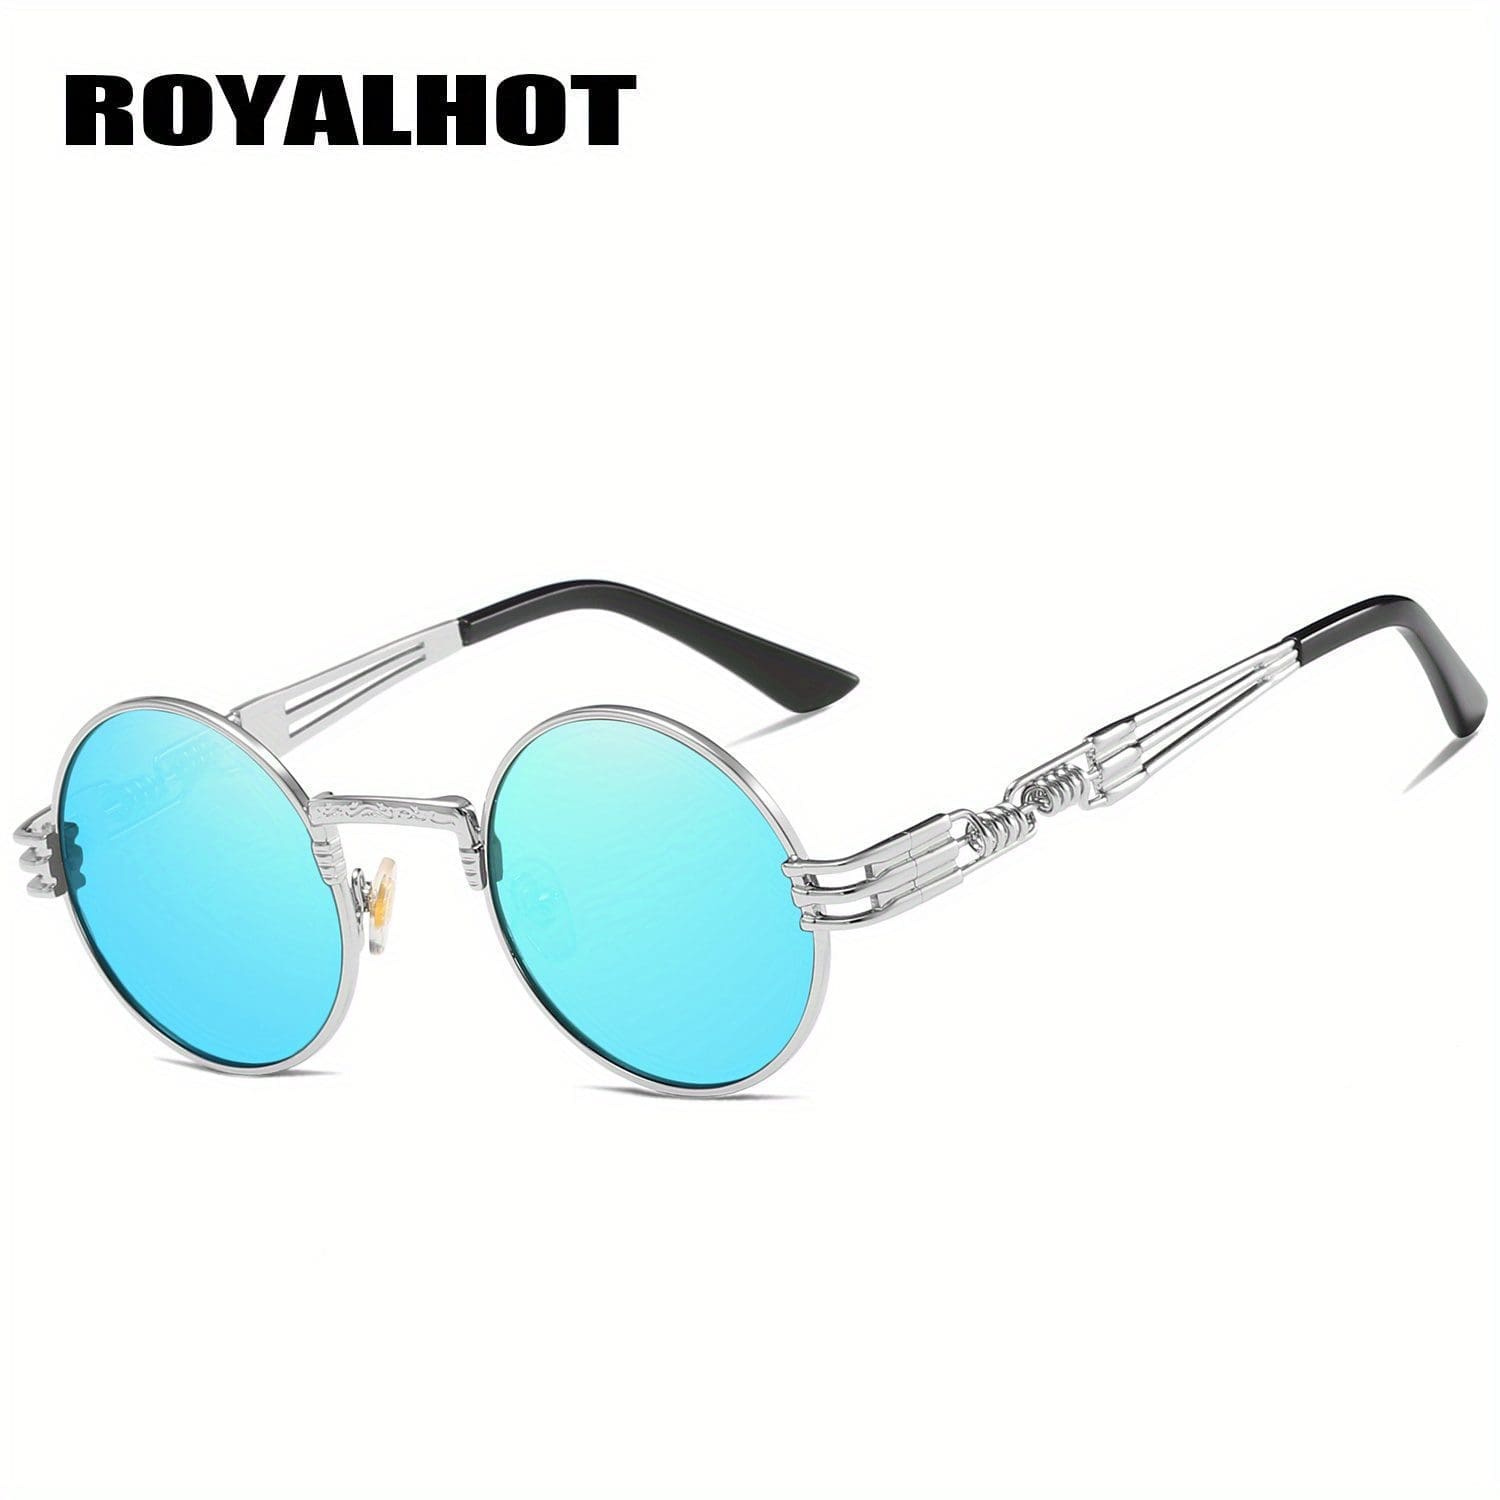 Retro Royalhot Glasses